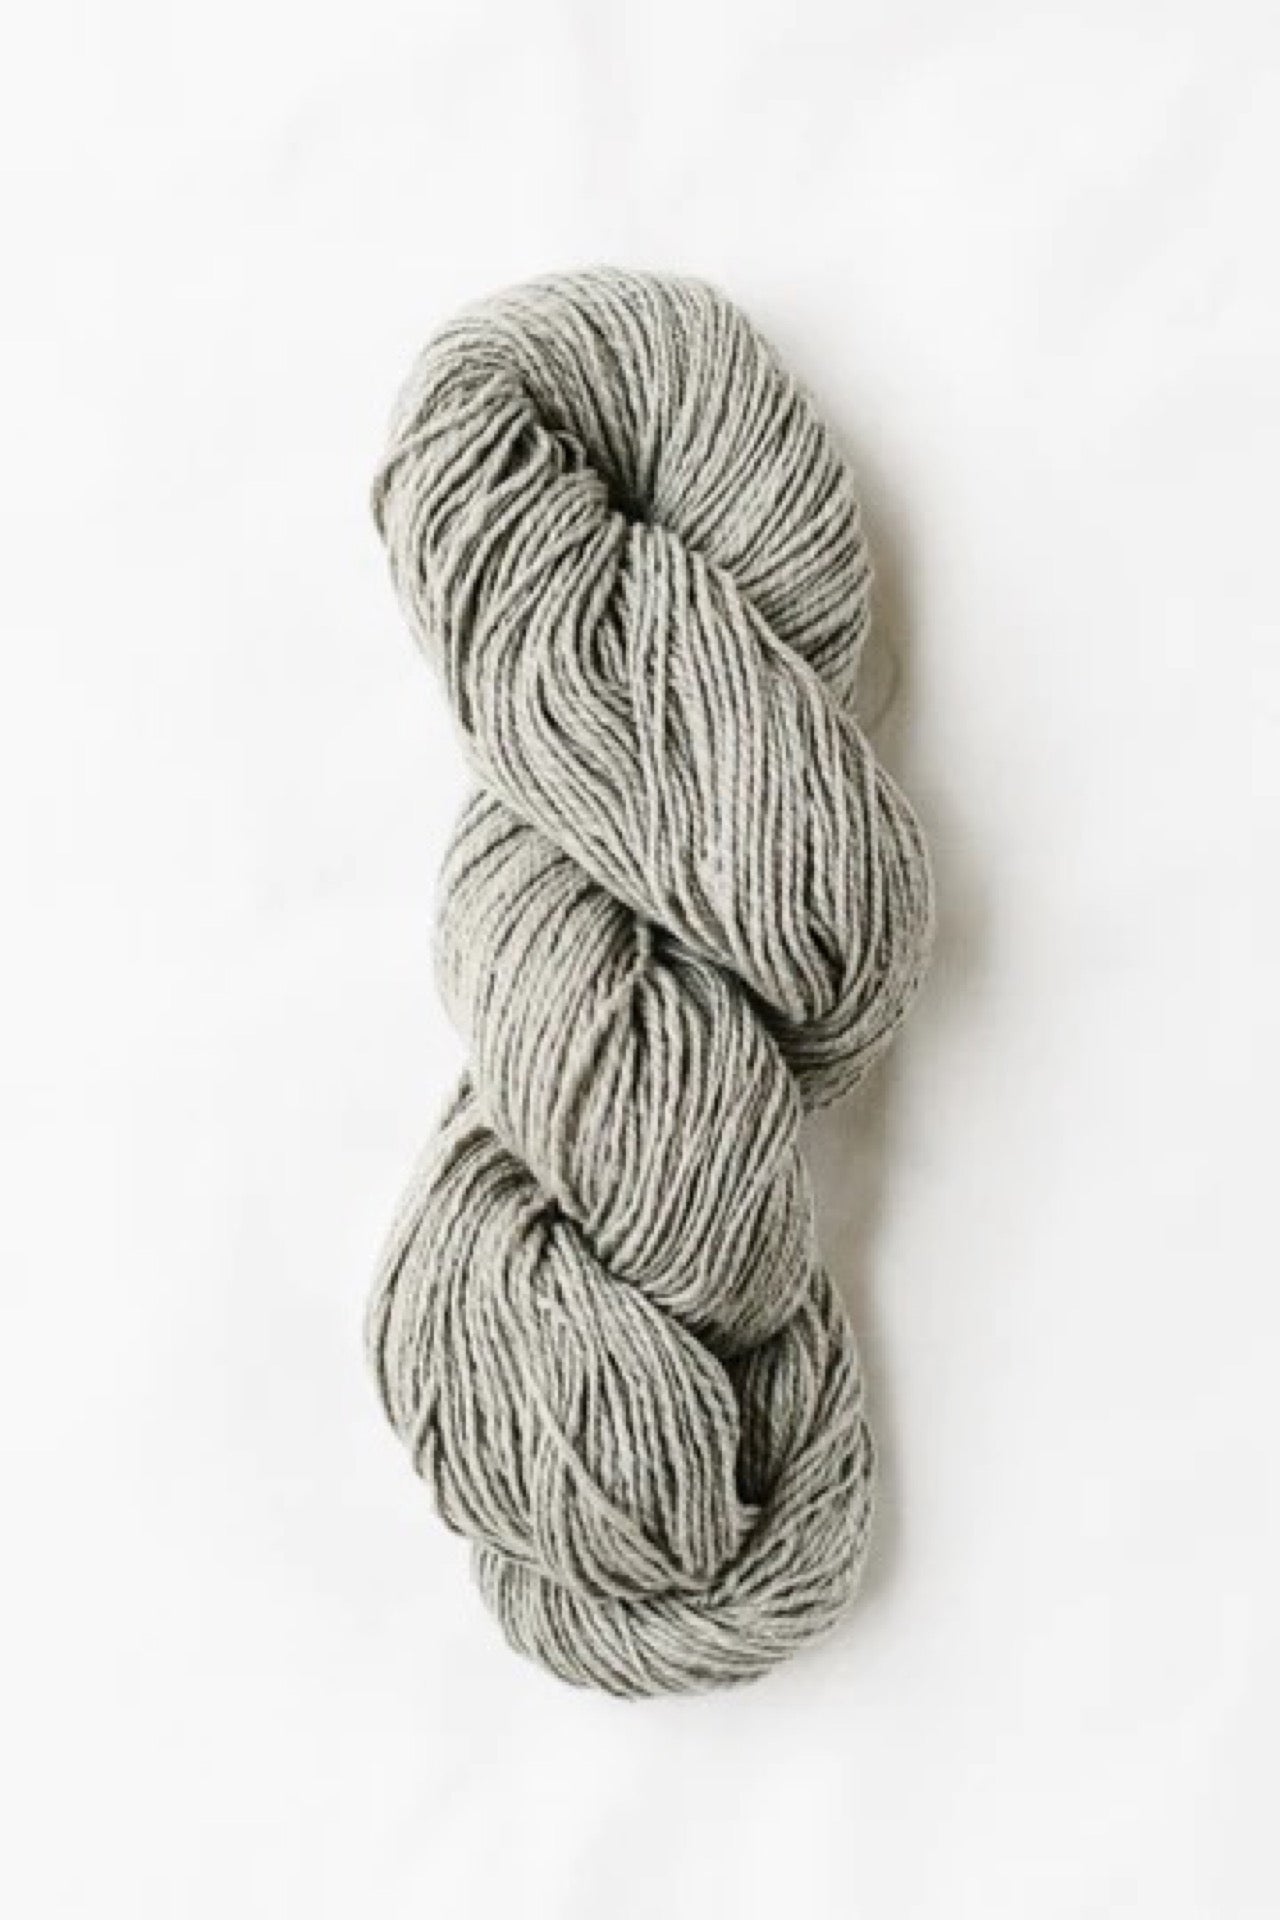 Ethiopian Handspun Cotton Yarn, Natural – Handspun Hope